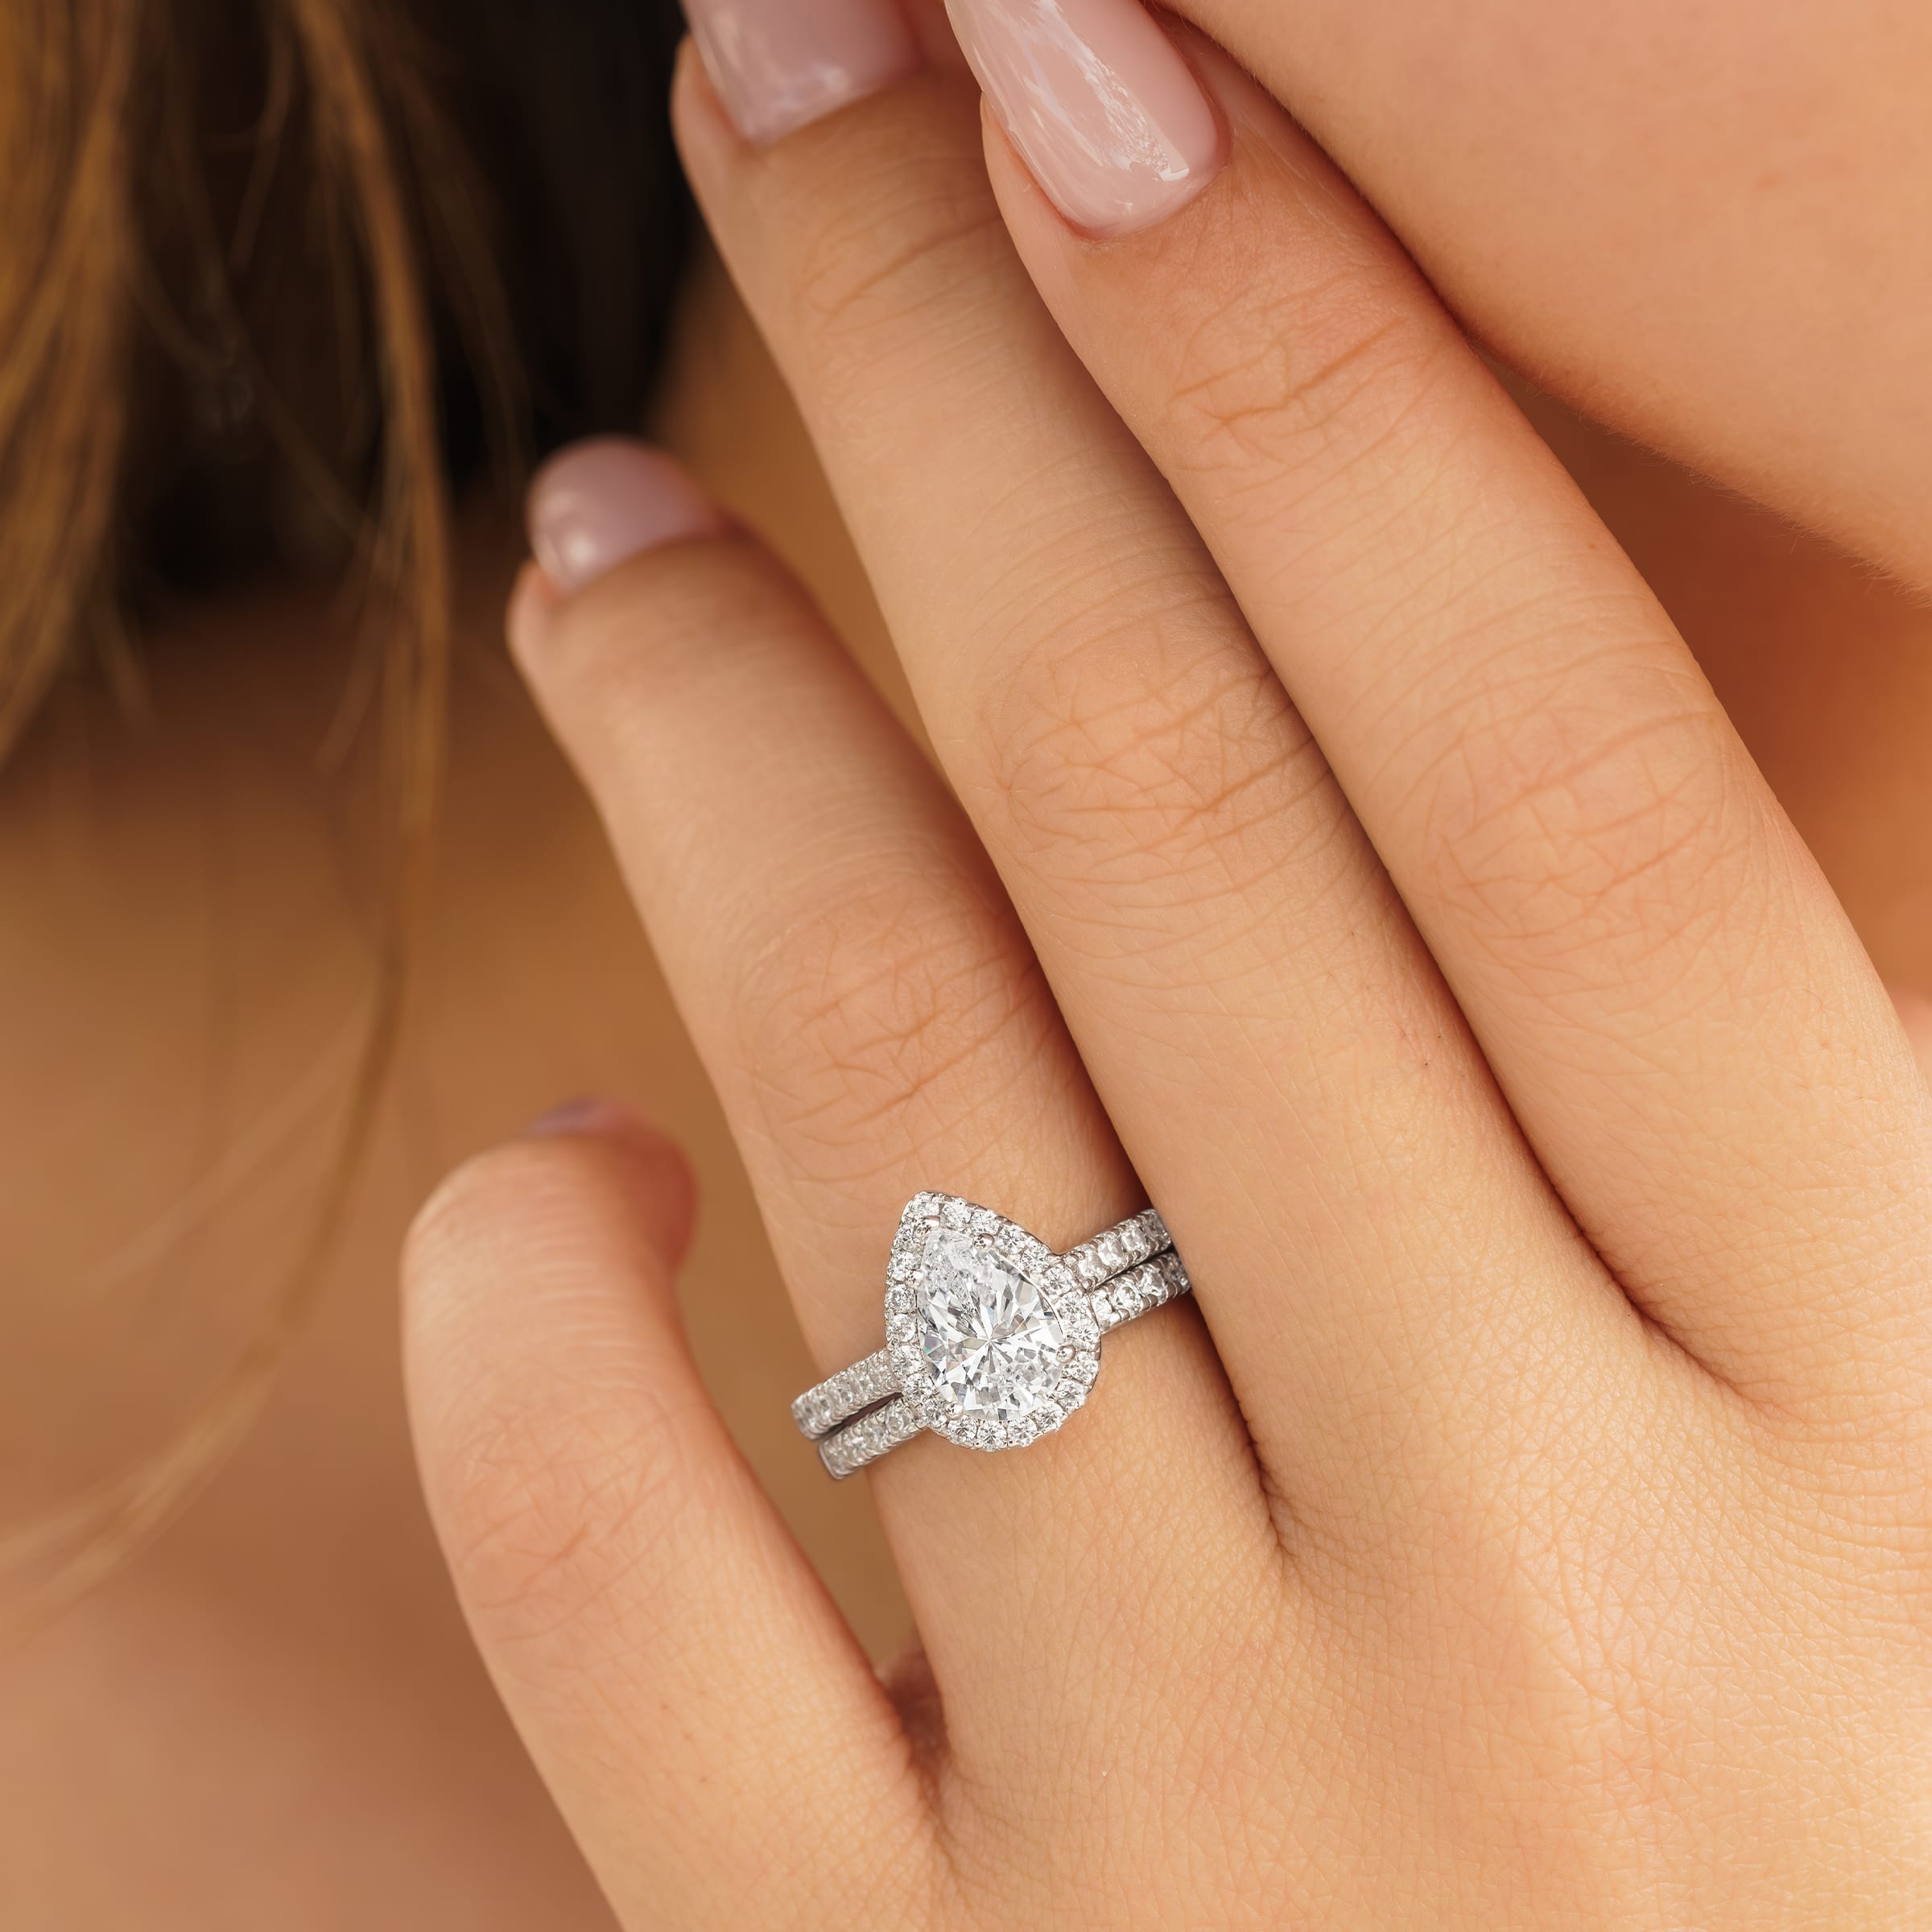 Silver Ring Design | new ring design collection for girls | chadi ki ring  ke new design - YouTube